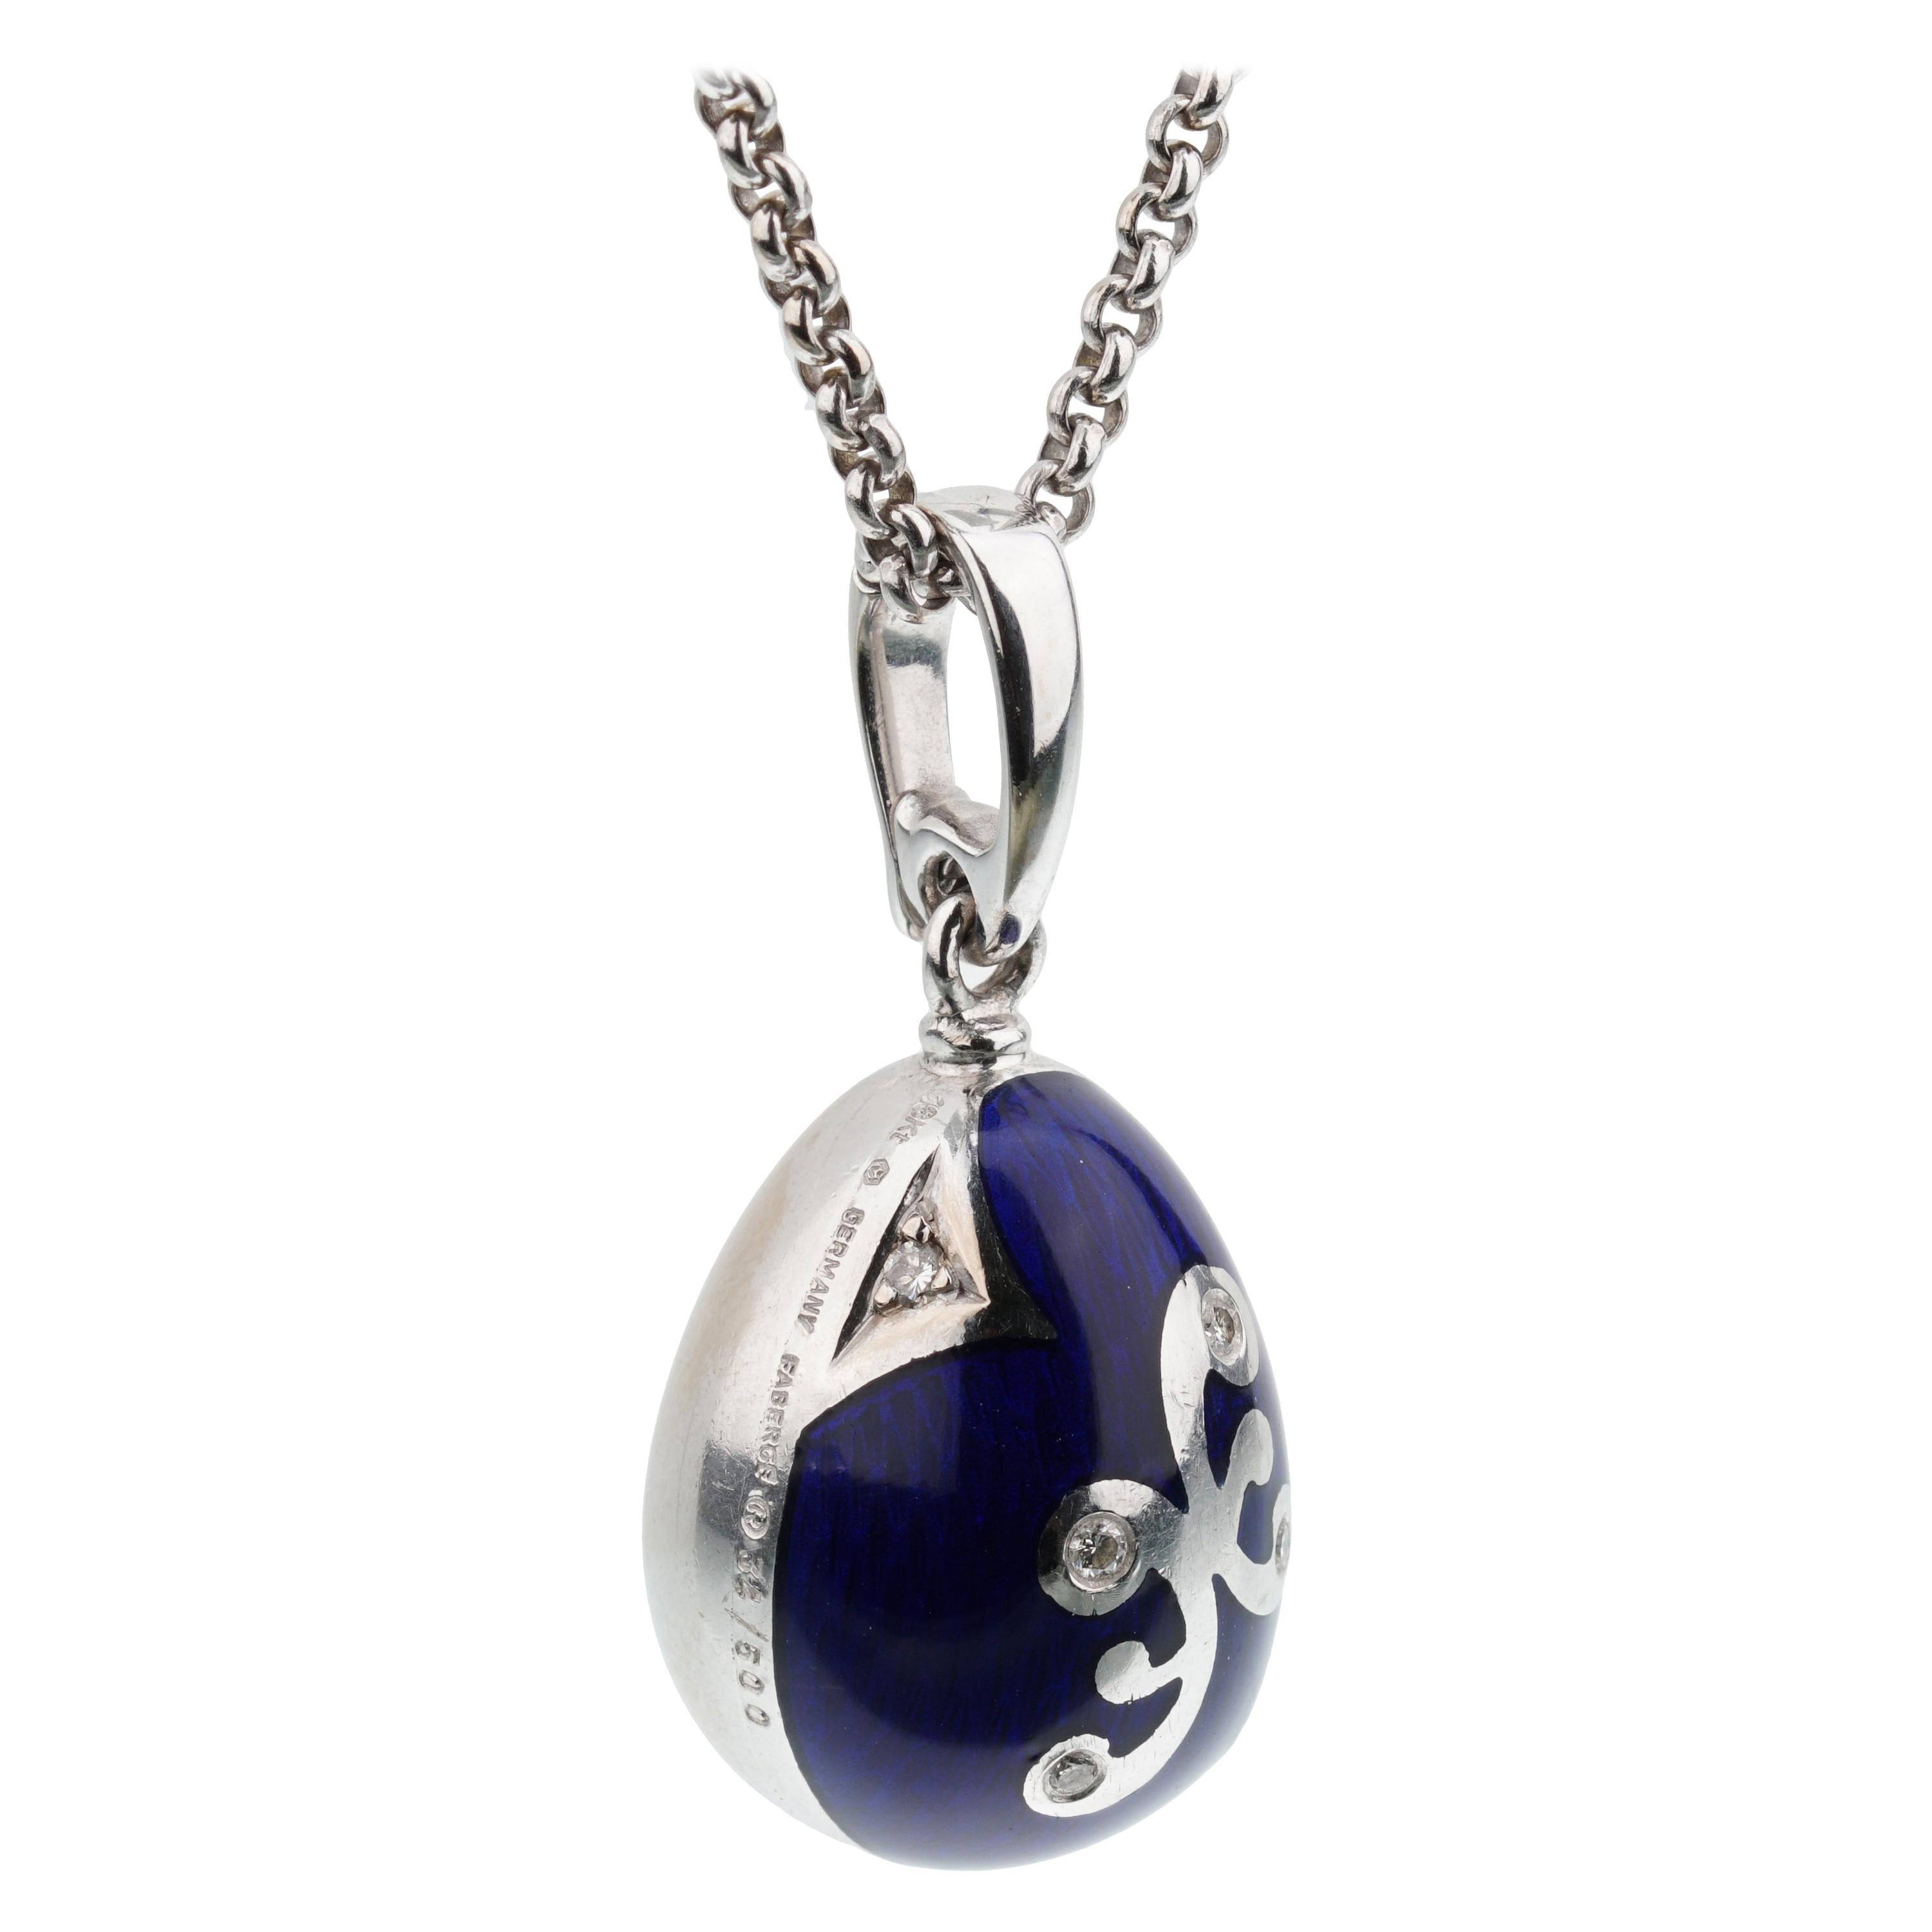 Fabrege Limited Edition Enamel Diamond Pendant Necklace